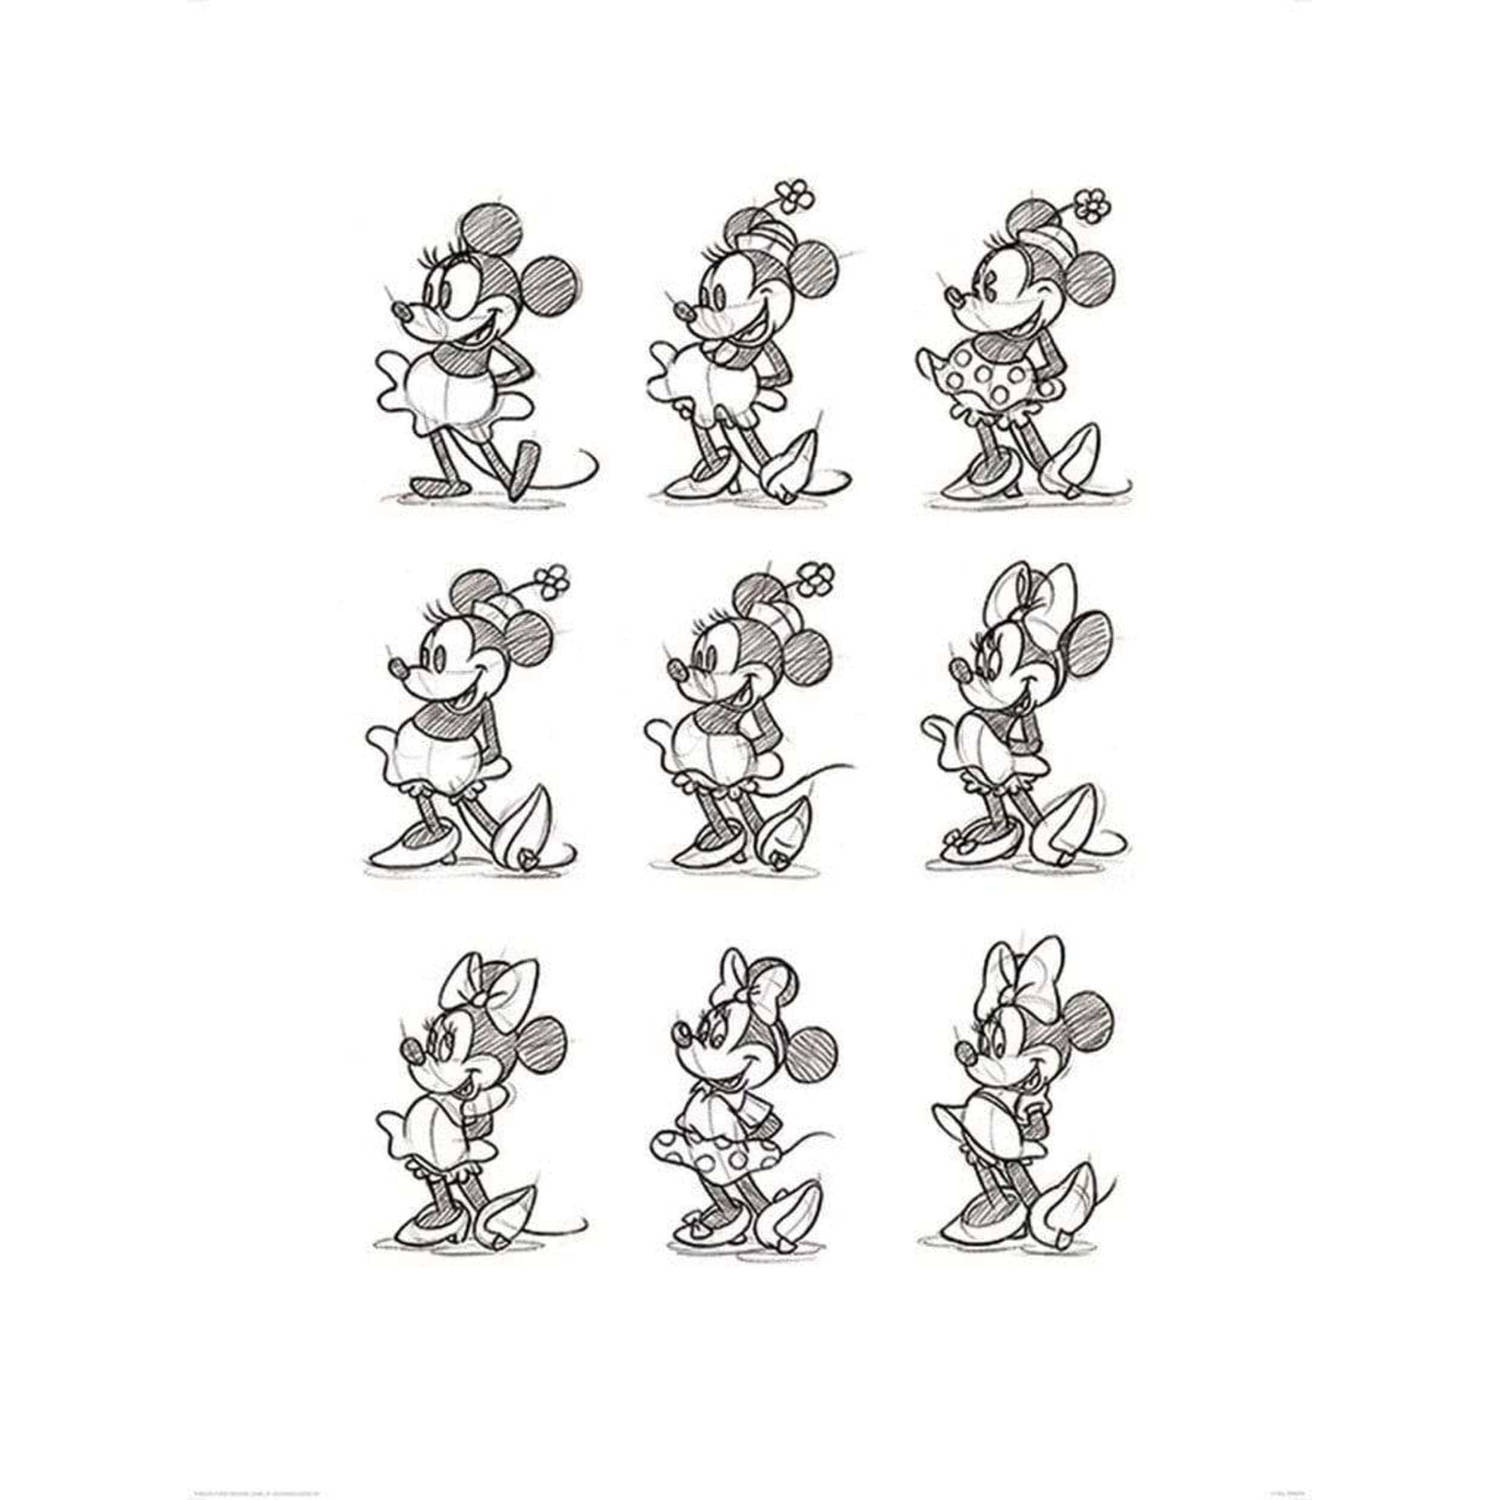 Kunstdruk Minnie Mouse Sketched Multi 60x80cm